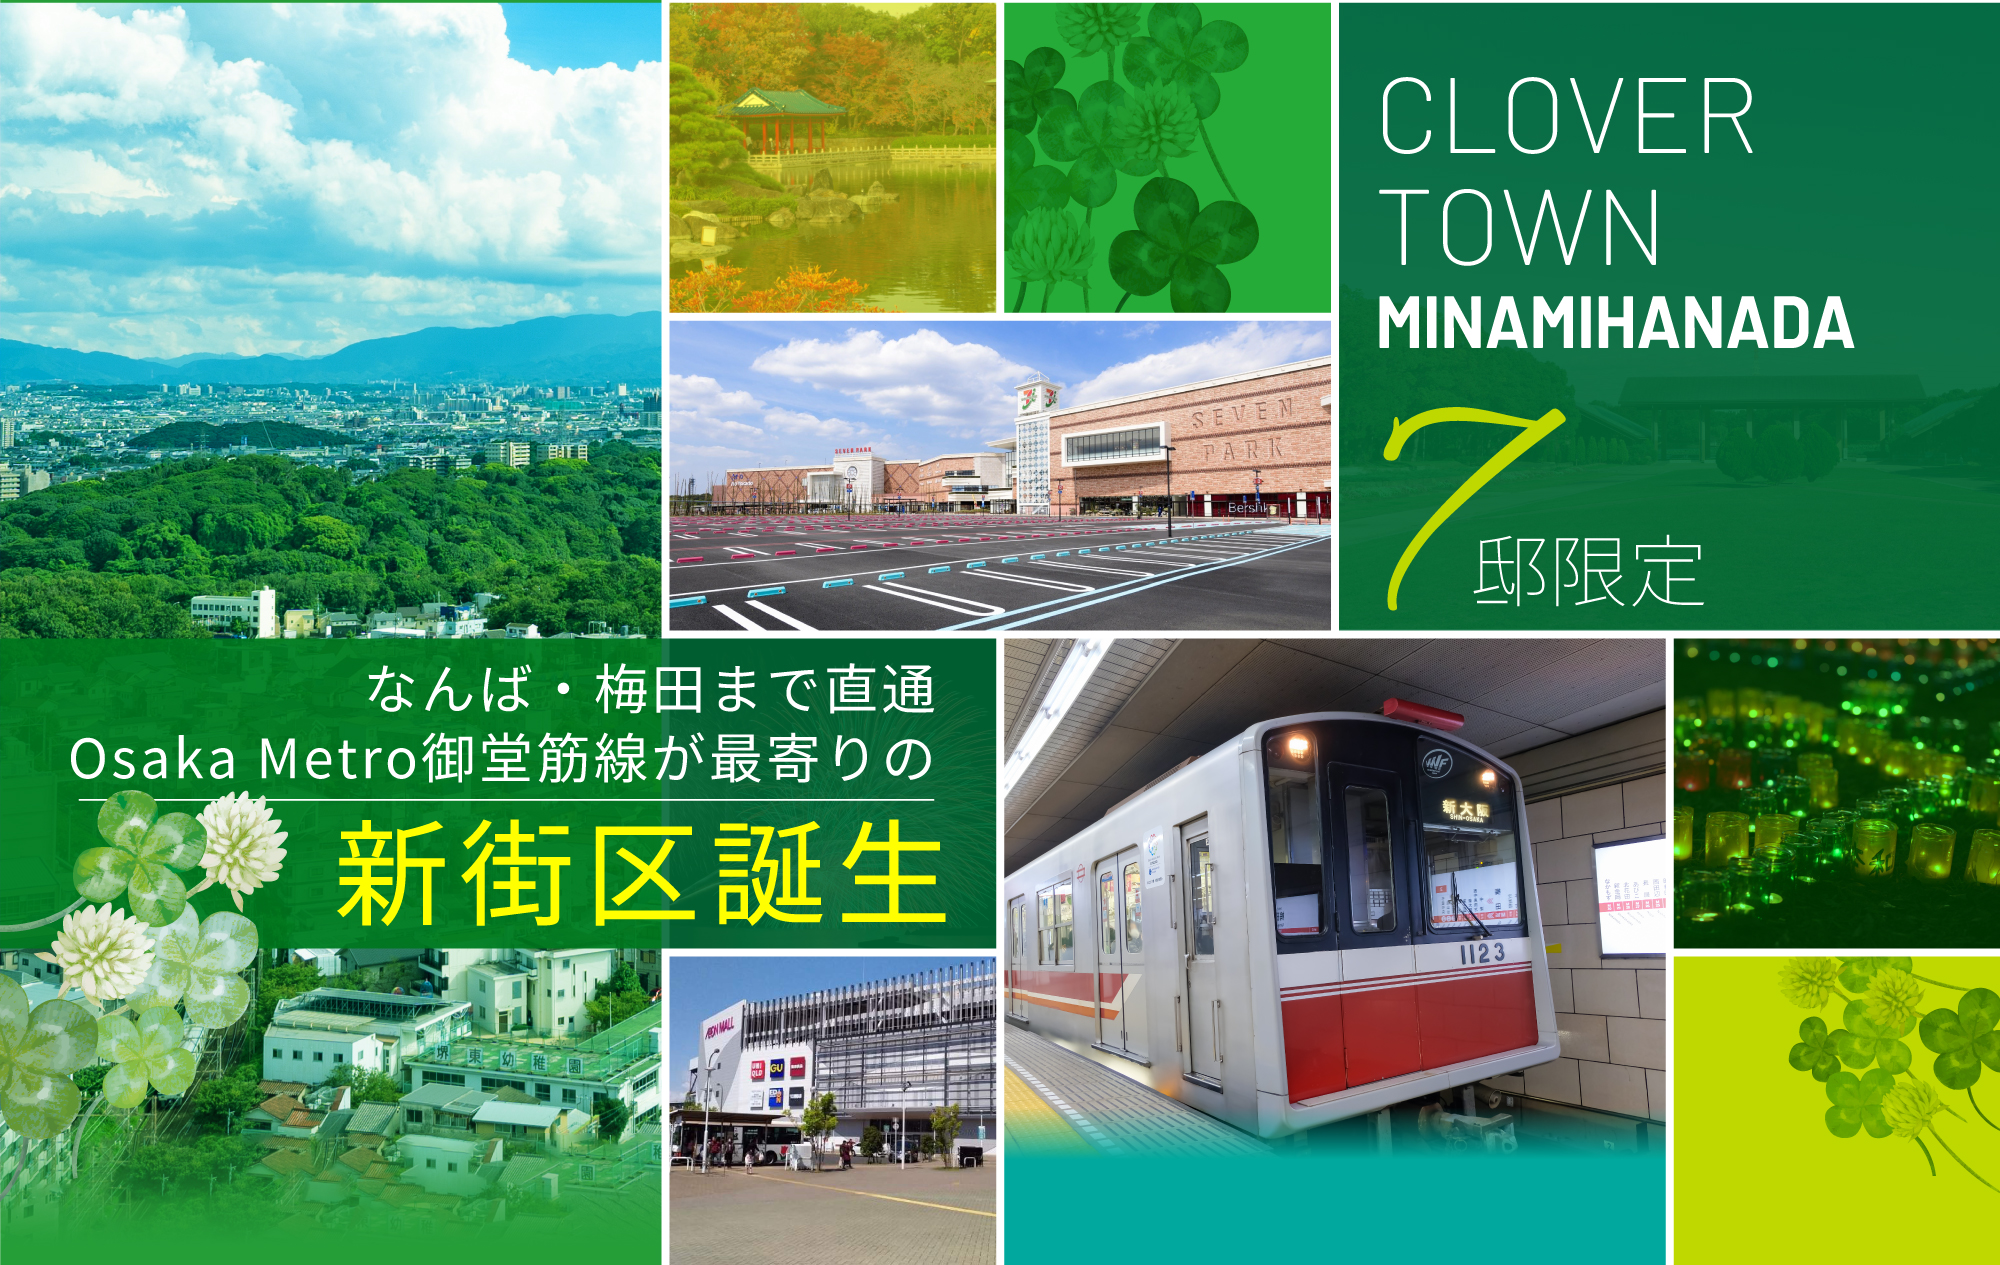 CLOVER TOWN MINAMIHANADA 7低限定 人気の堺市北区南花田エリアに新街区誕生